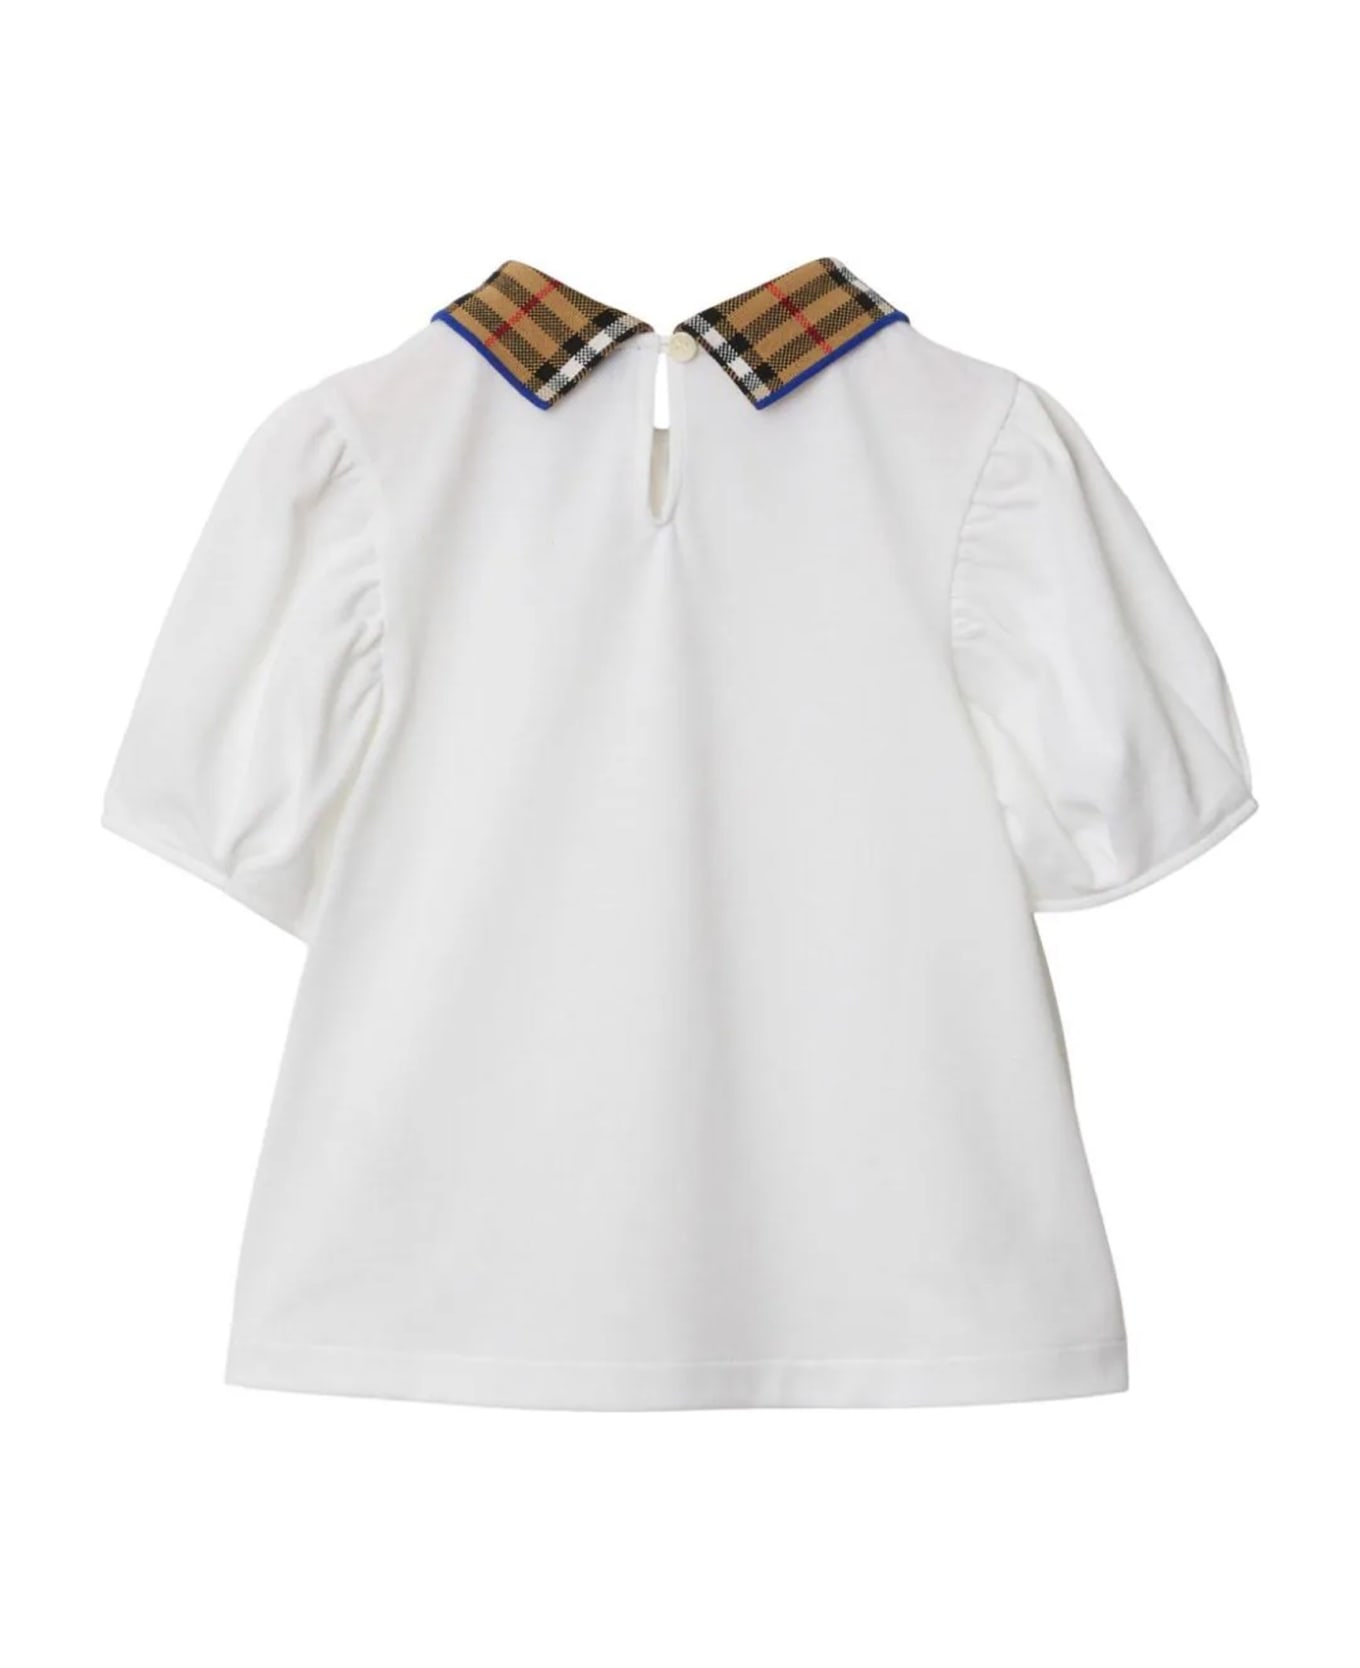 Burberry White Cotton Polo Shirt - Bianco